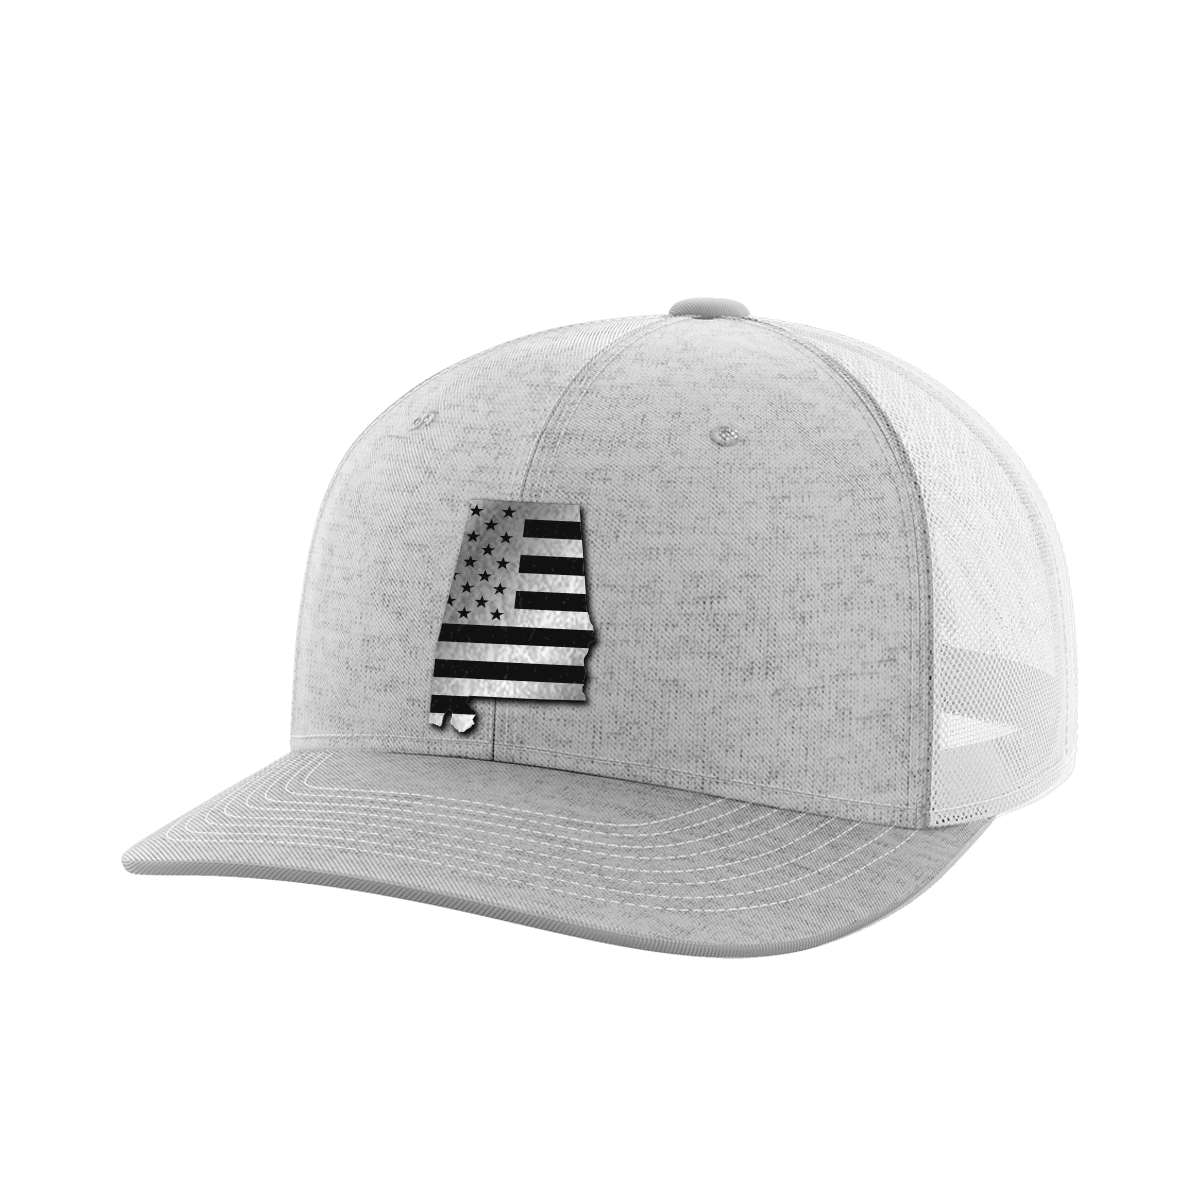 Alabama United Hats - Greater Half